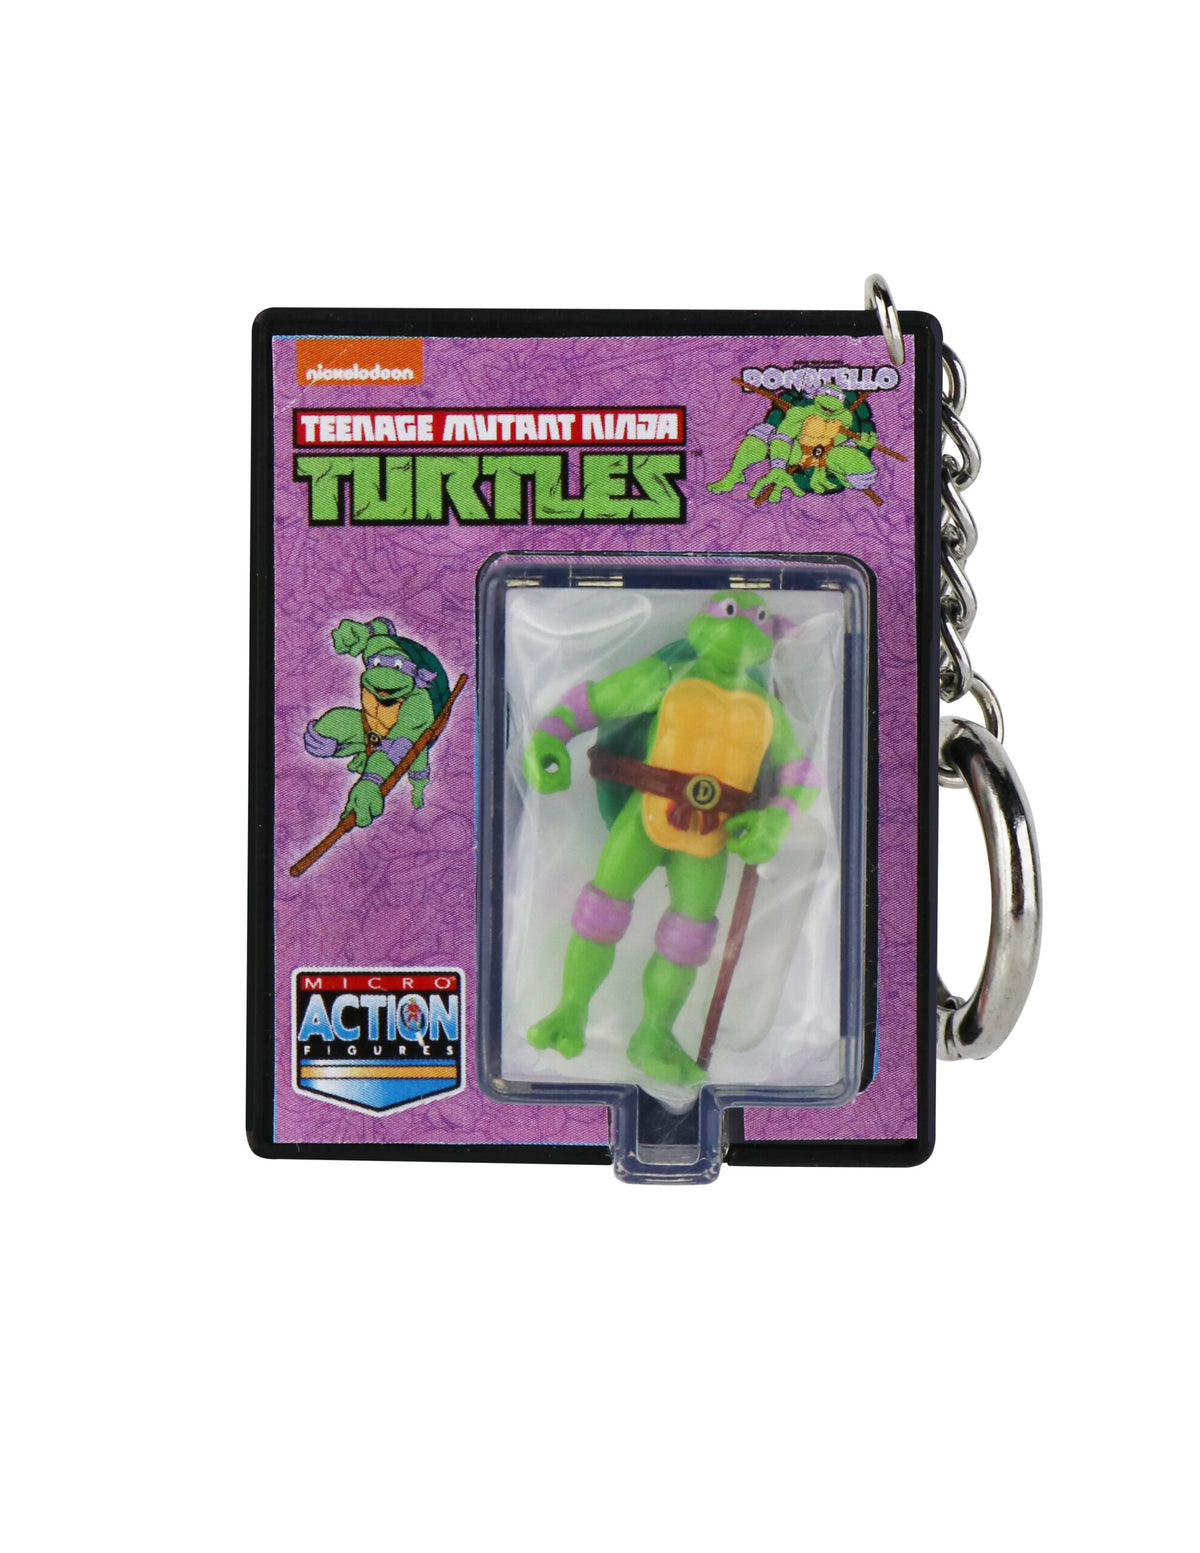 World's Smallest Teenage Mutant Ninja Turtles Donatello Micro Action Figure - Zlc Collectibles